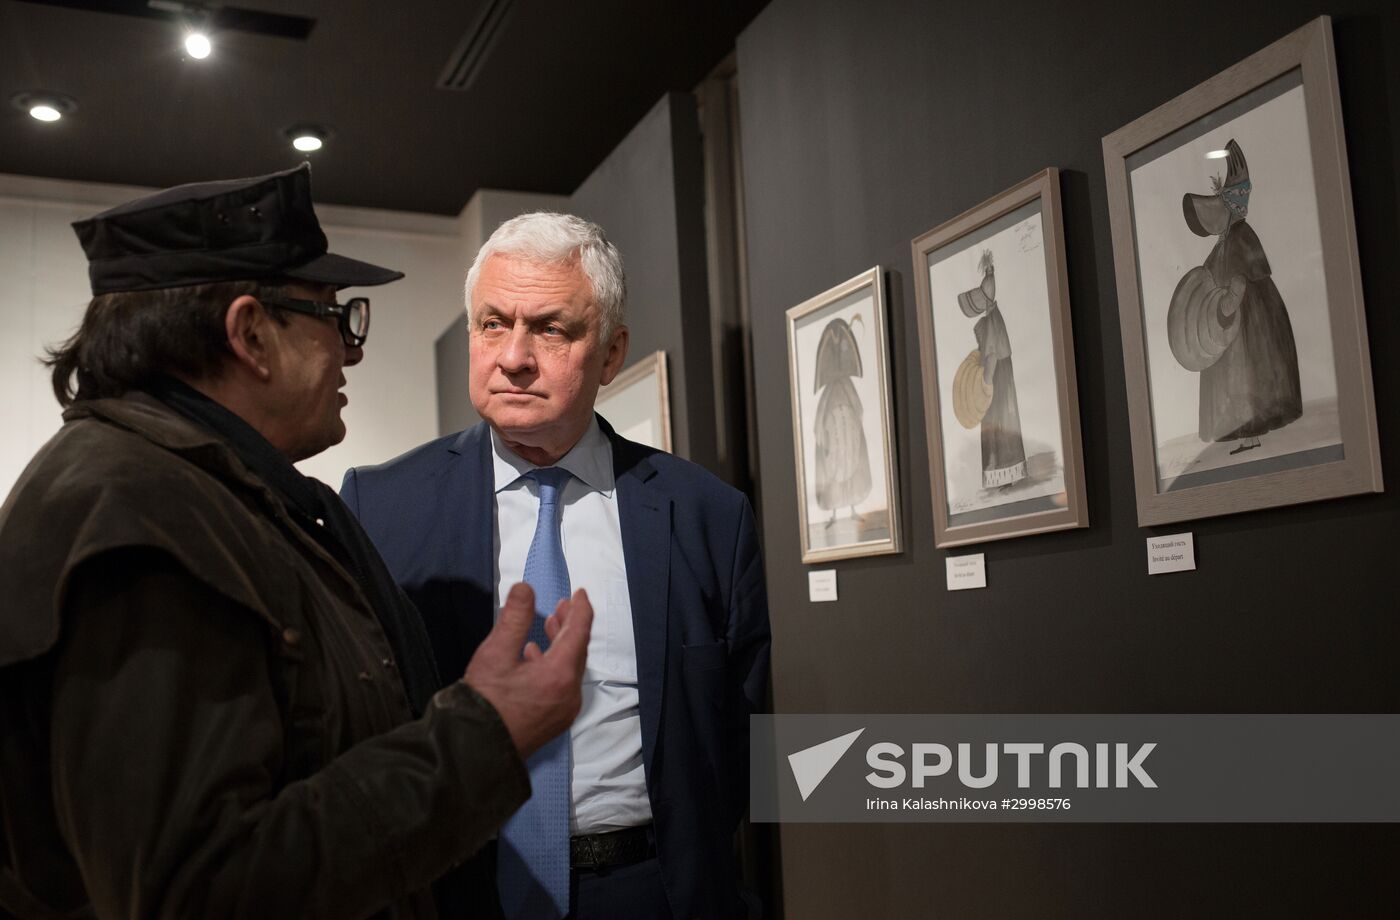 Mikhail Shemyakin's exhibition opens in Paris